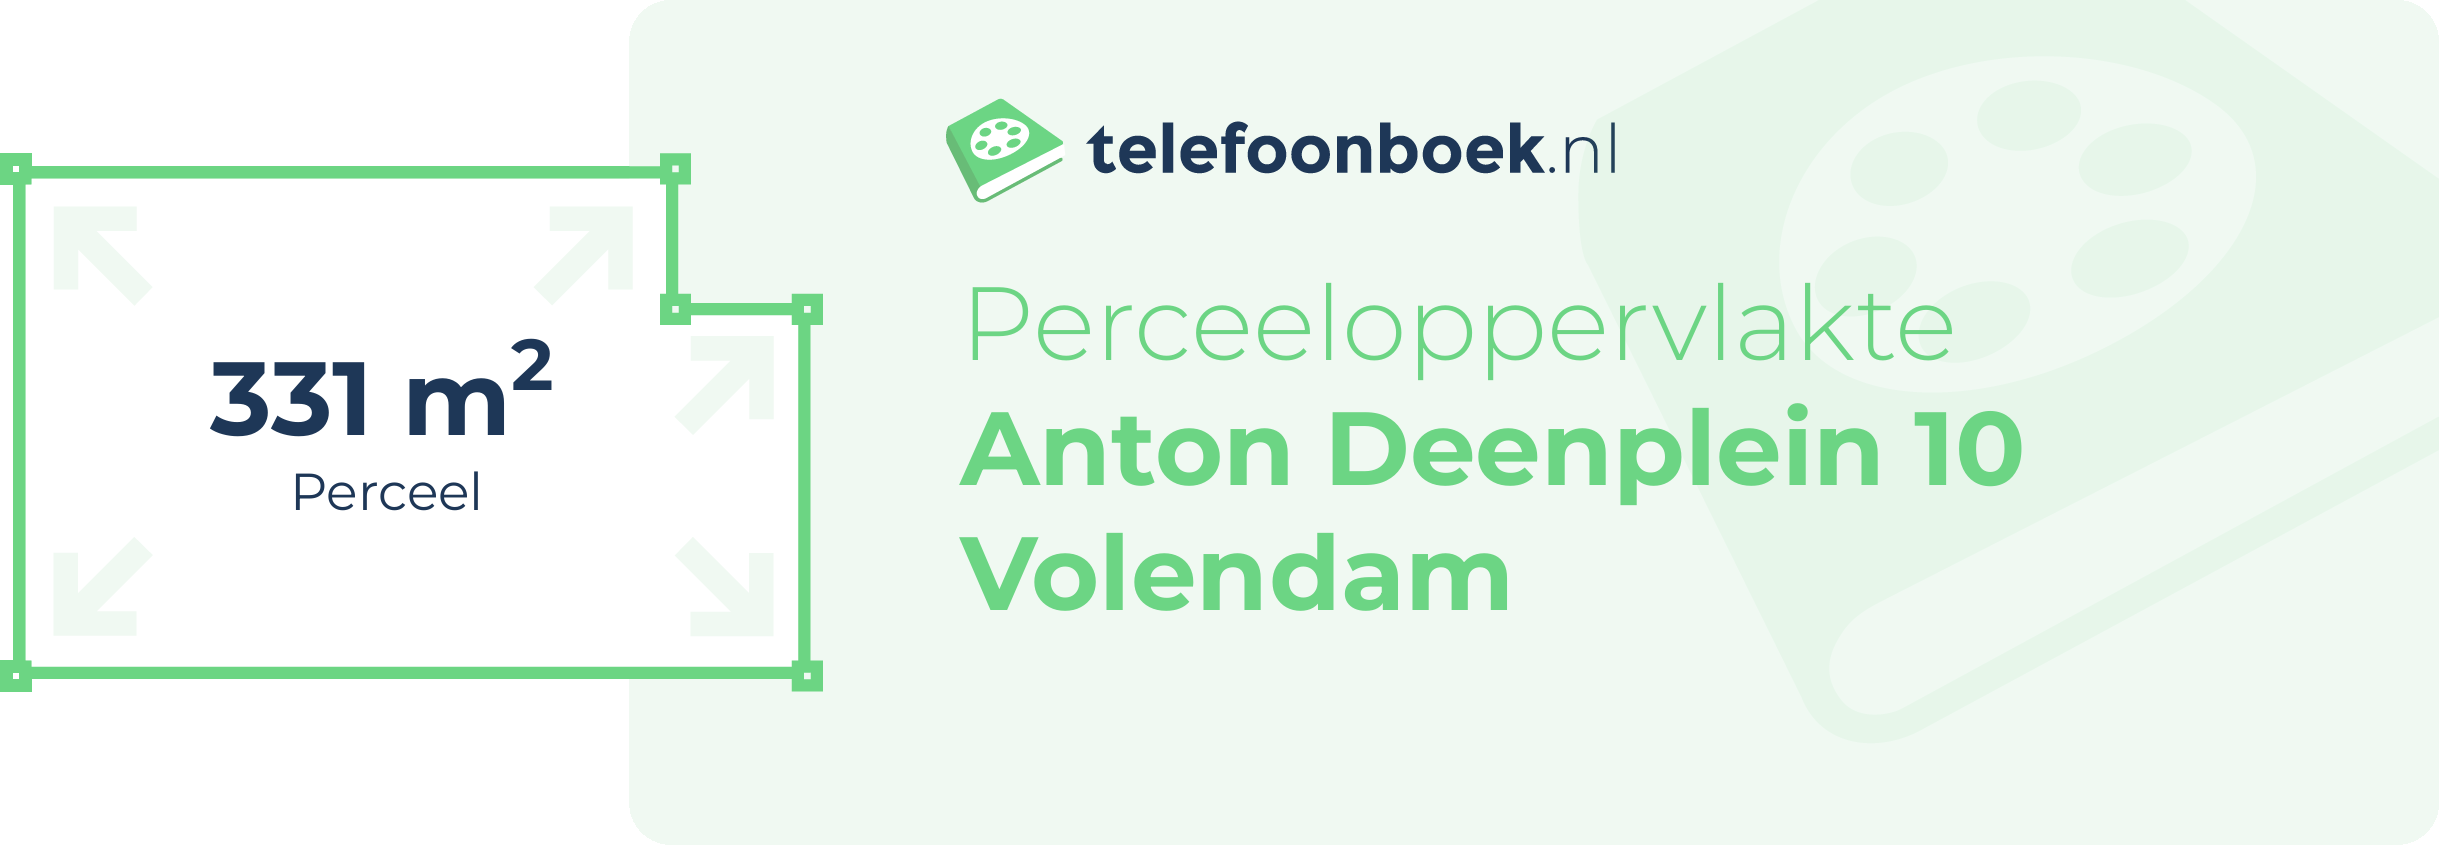 Perceeloppervlakte Anton Deenplein 10 Volendam